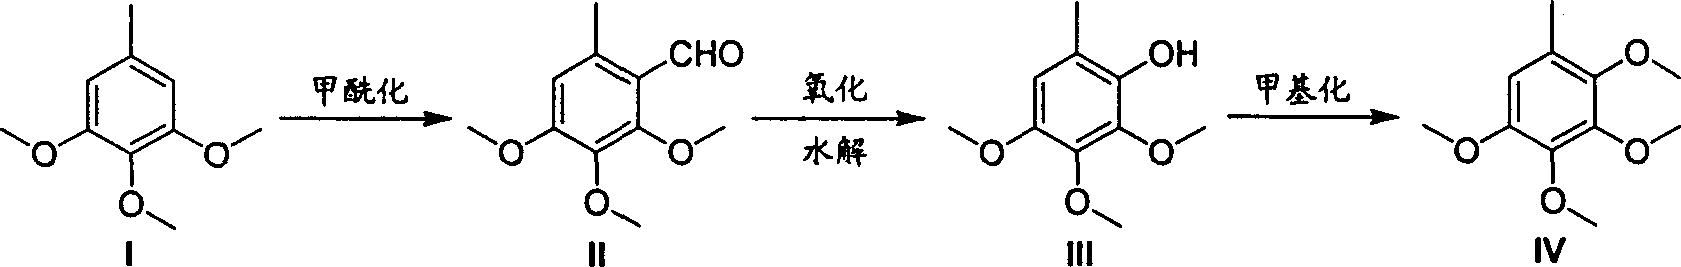 2,3,4,5-tetramethoxyl toluene synthesis method